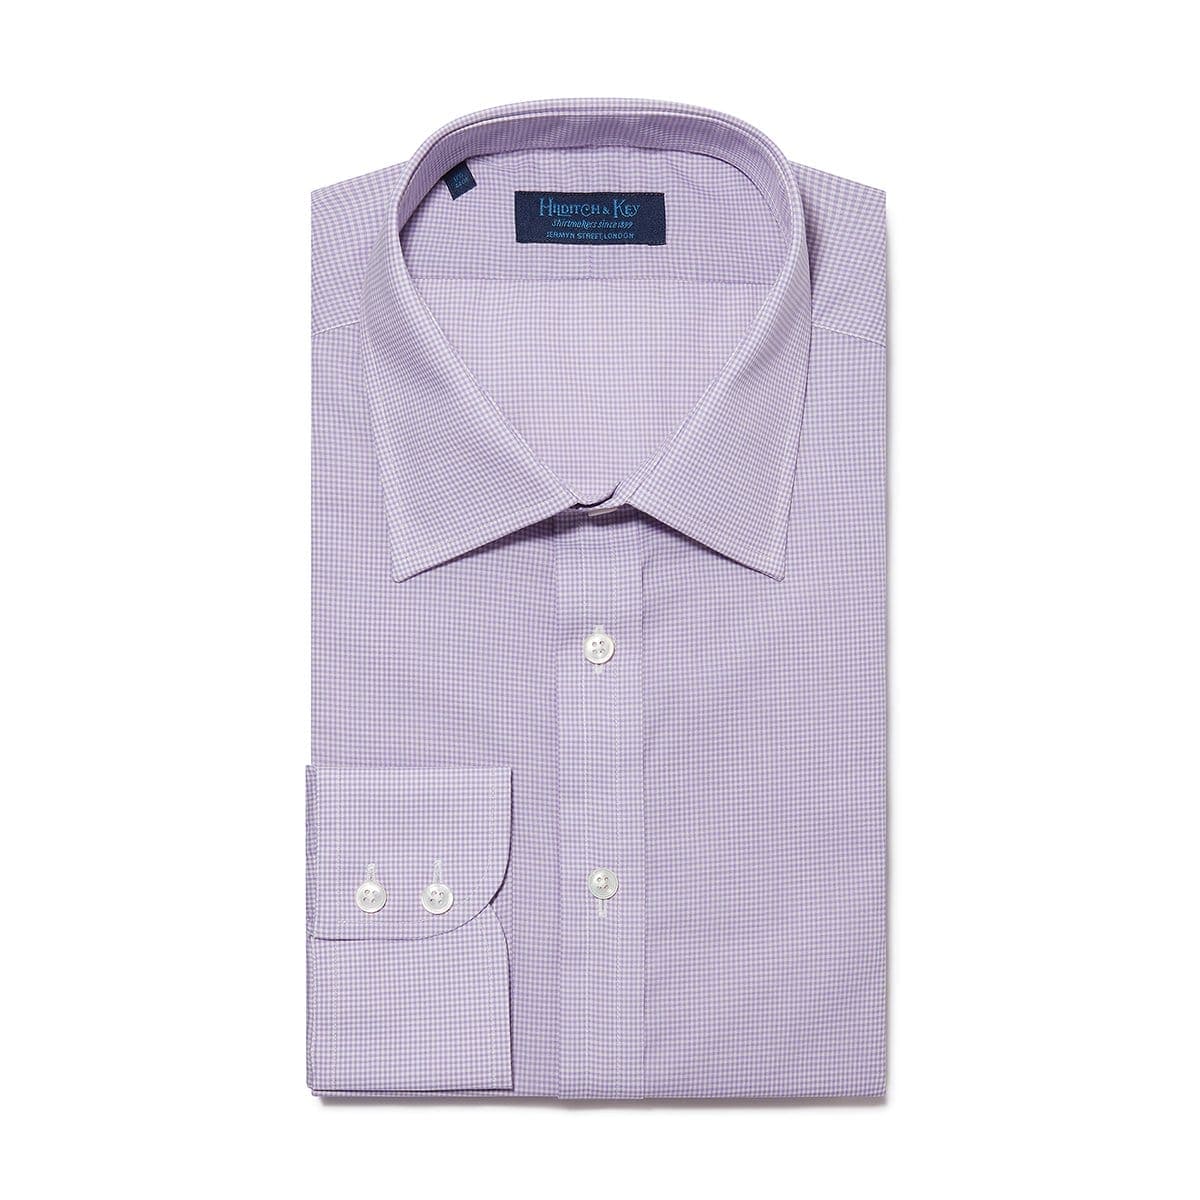 Contemporary Fit, Classic Collar, 2 Button Cuff Shirt in a Lilac & White Check Twill Cotton